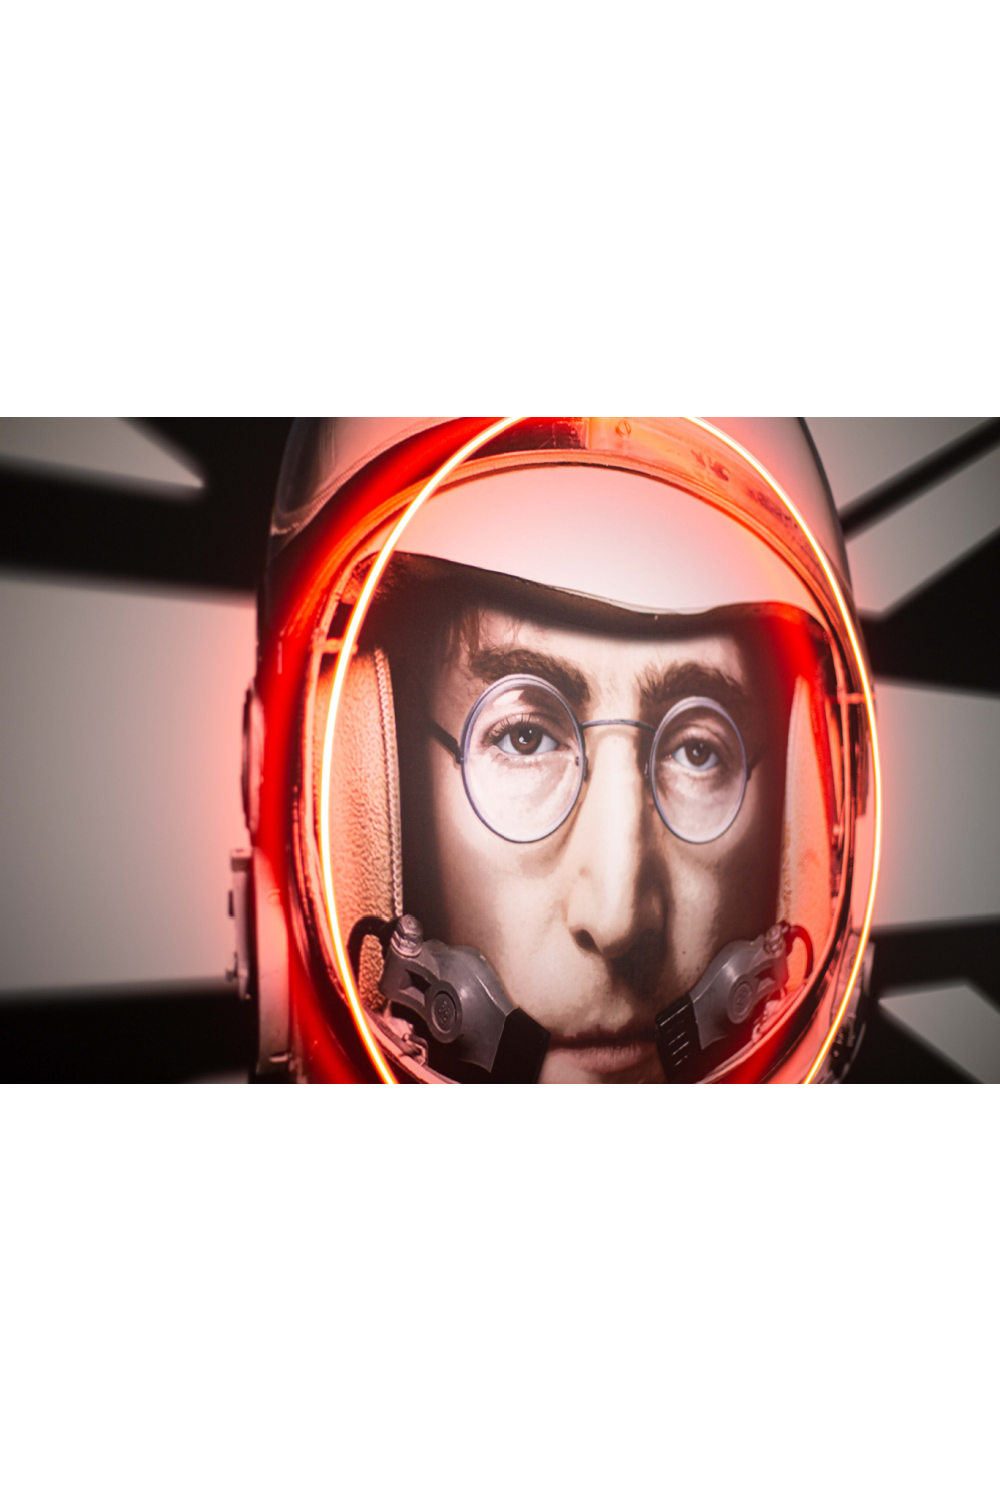 Beatles Neon Artwork | Andrew Martin Lennon Astronaut | Oroa.com